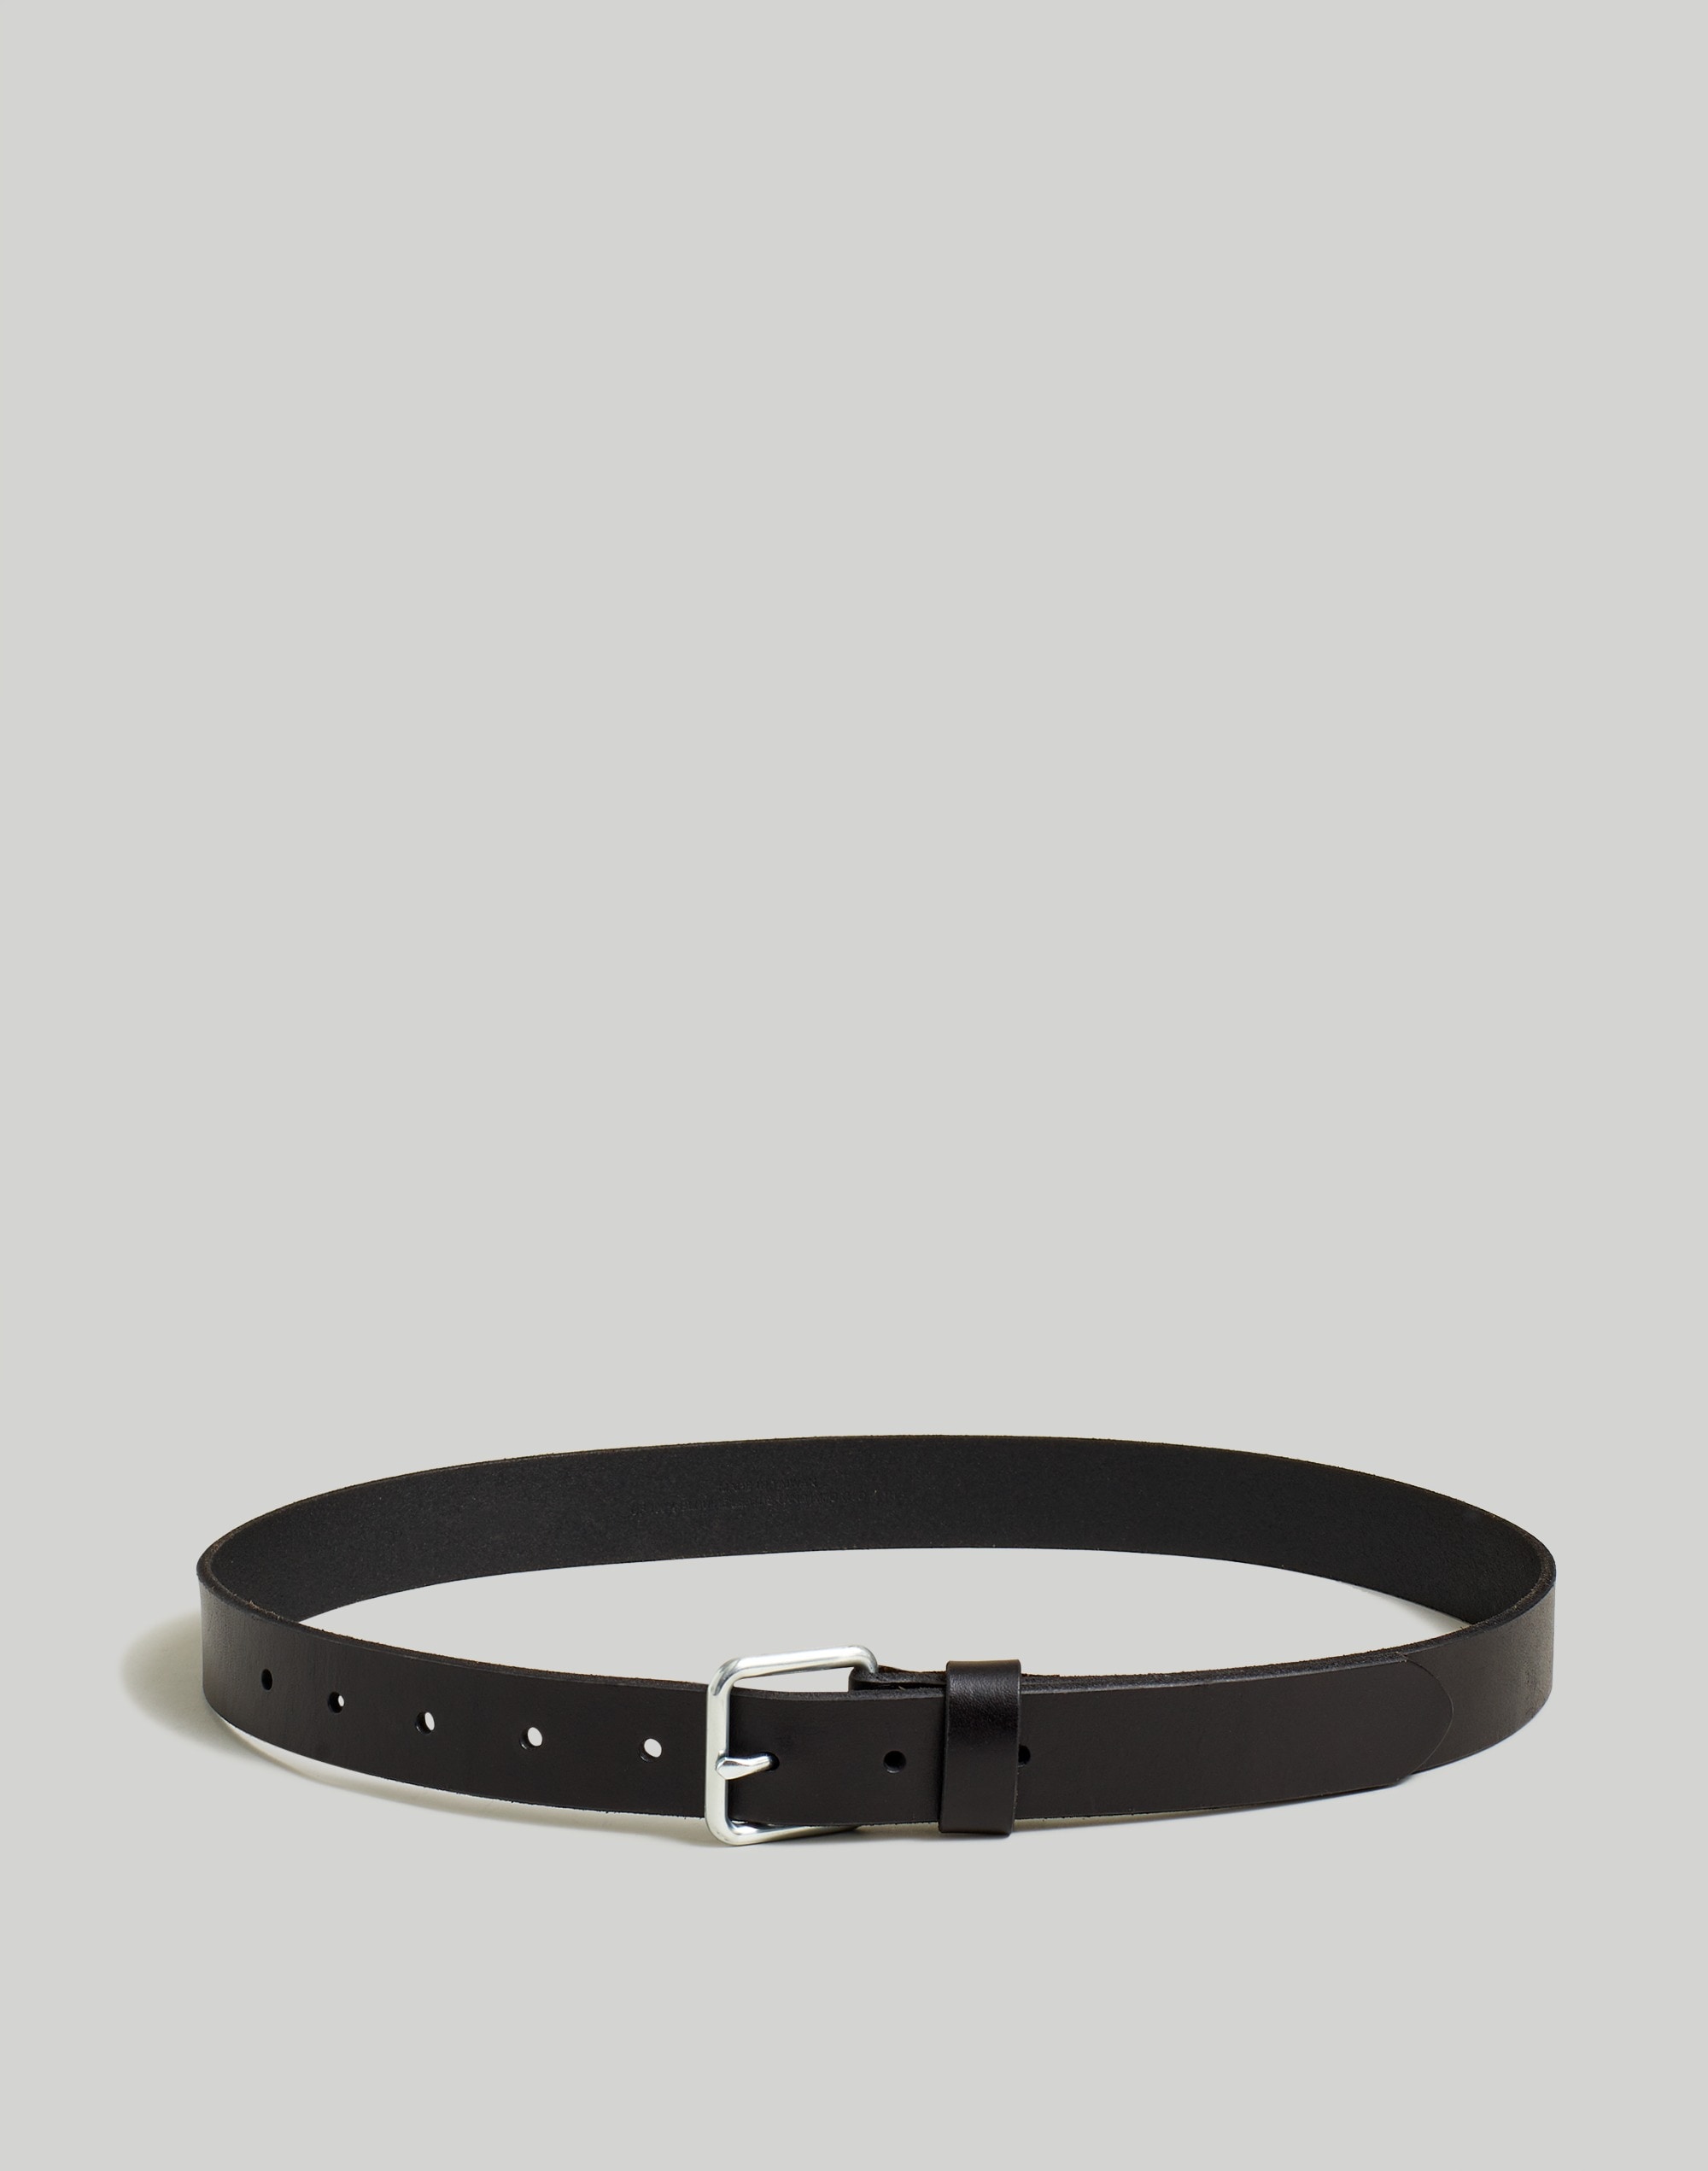 Mw Narrow Leather Belt In Classic Black